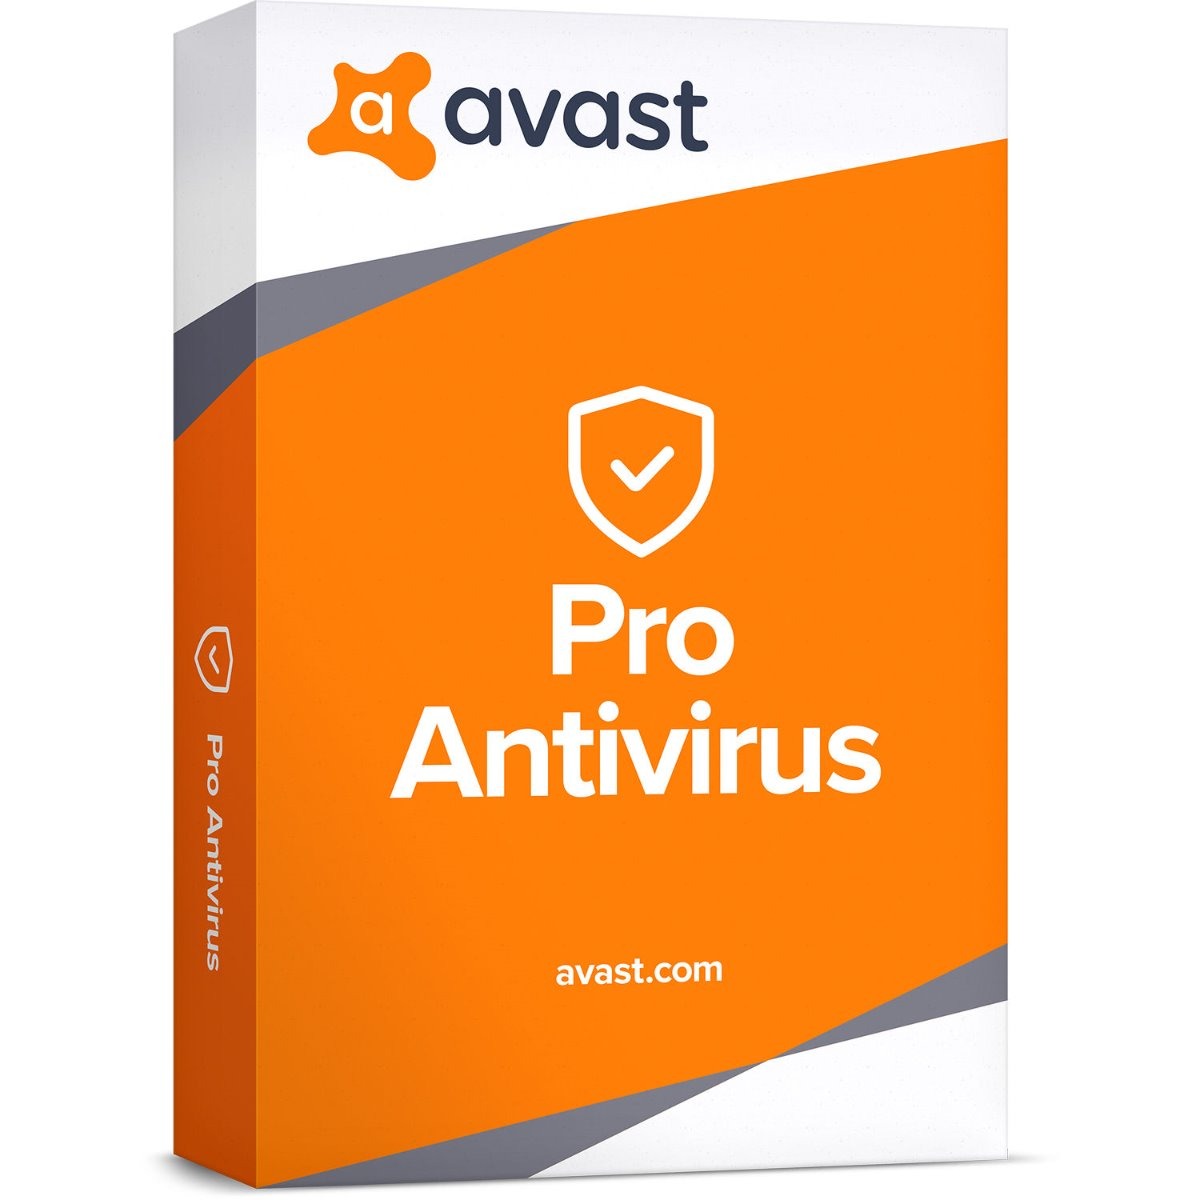 Antivirus software for computer download adobe after effects cs4 download 32bit crack